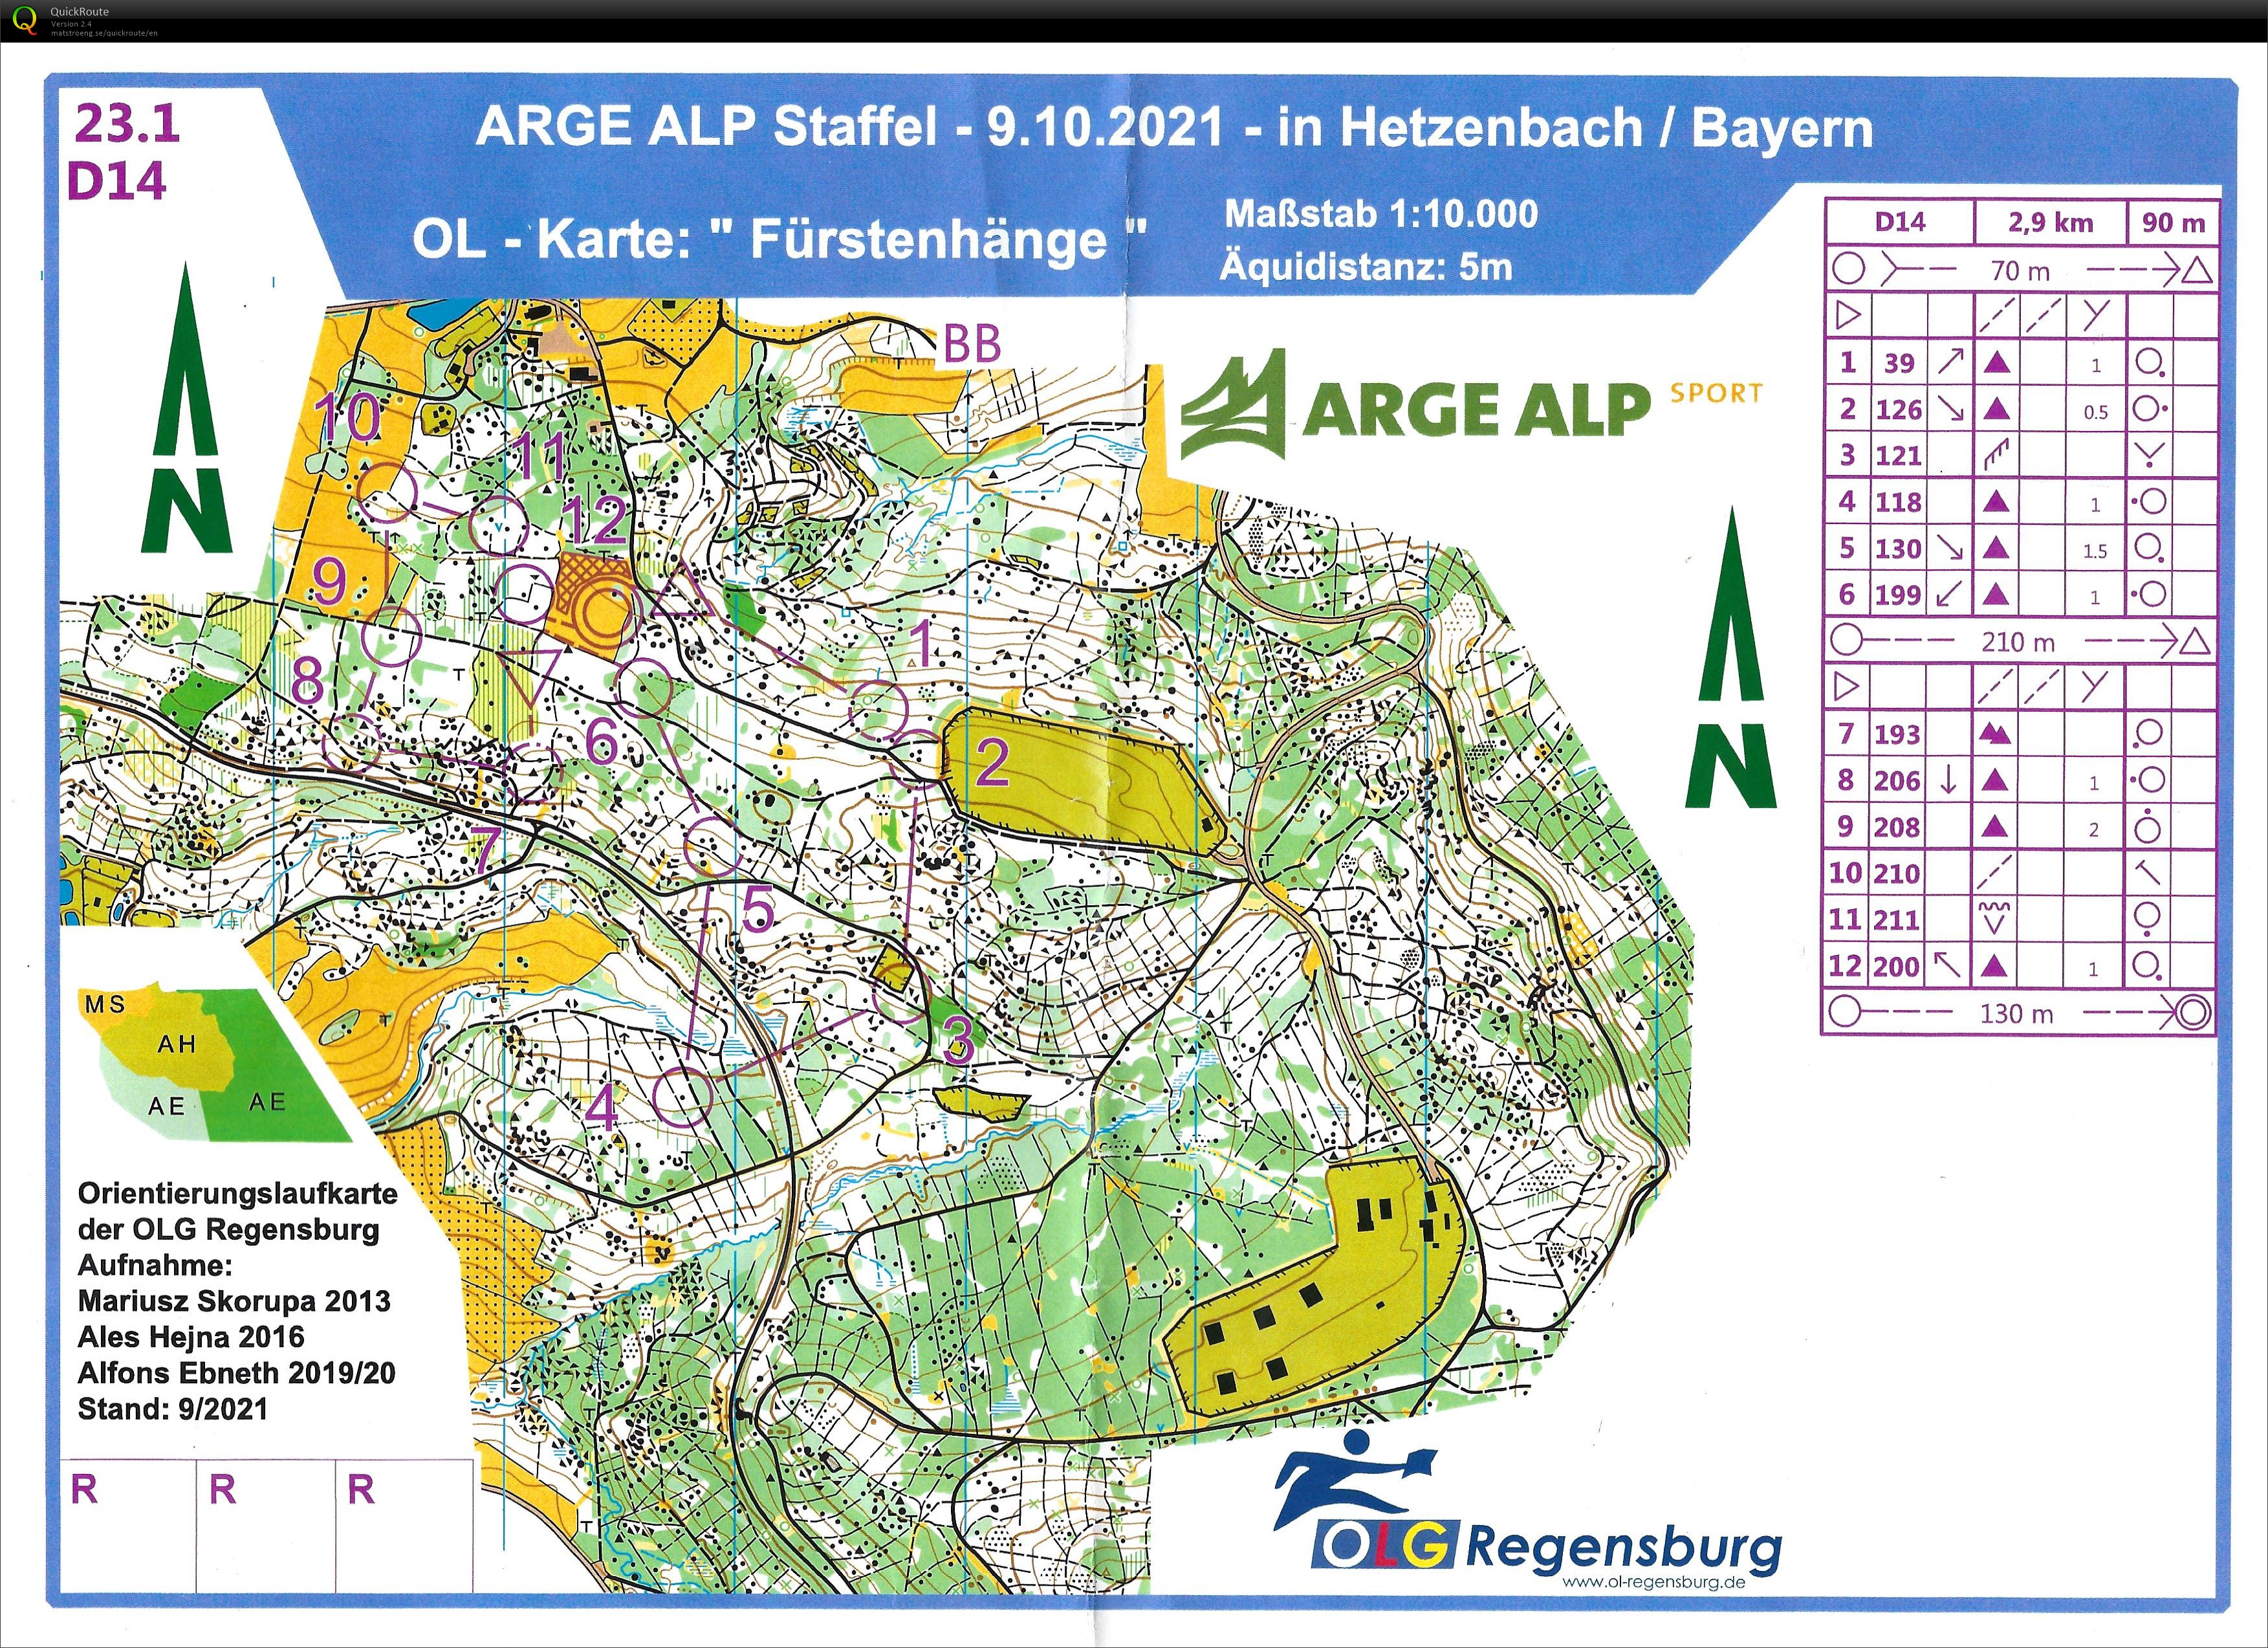 Arge Alp 2021 Regensburg (2021-10-09)